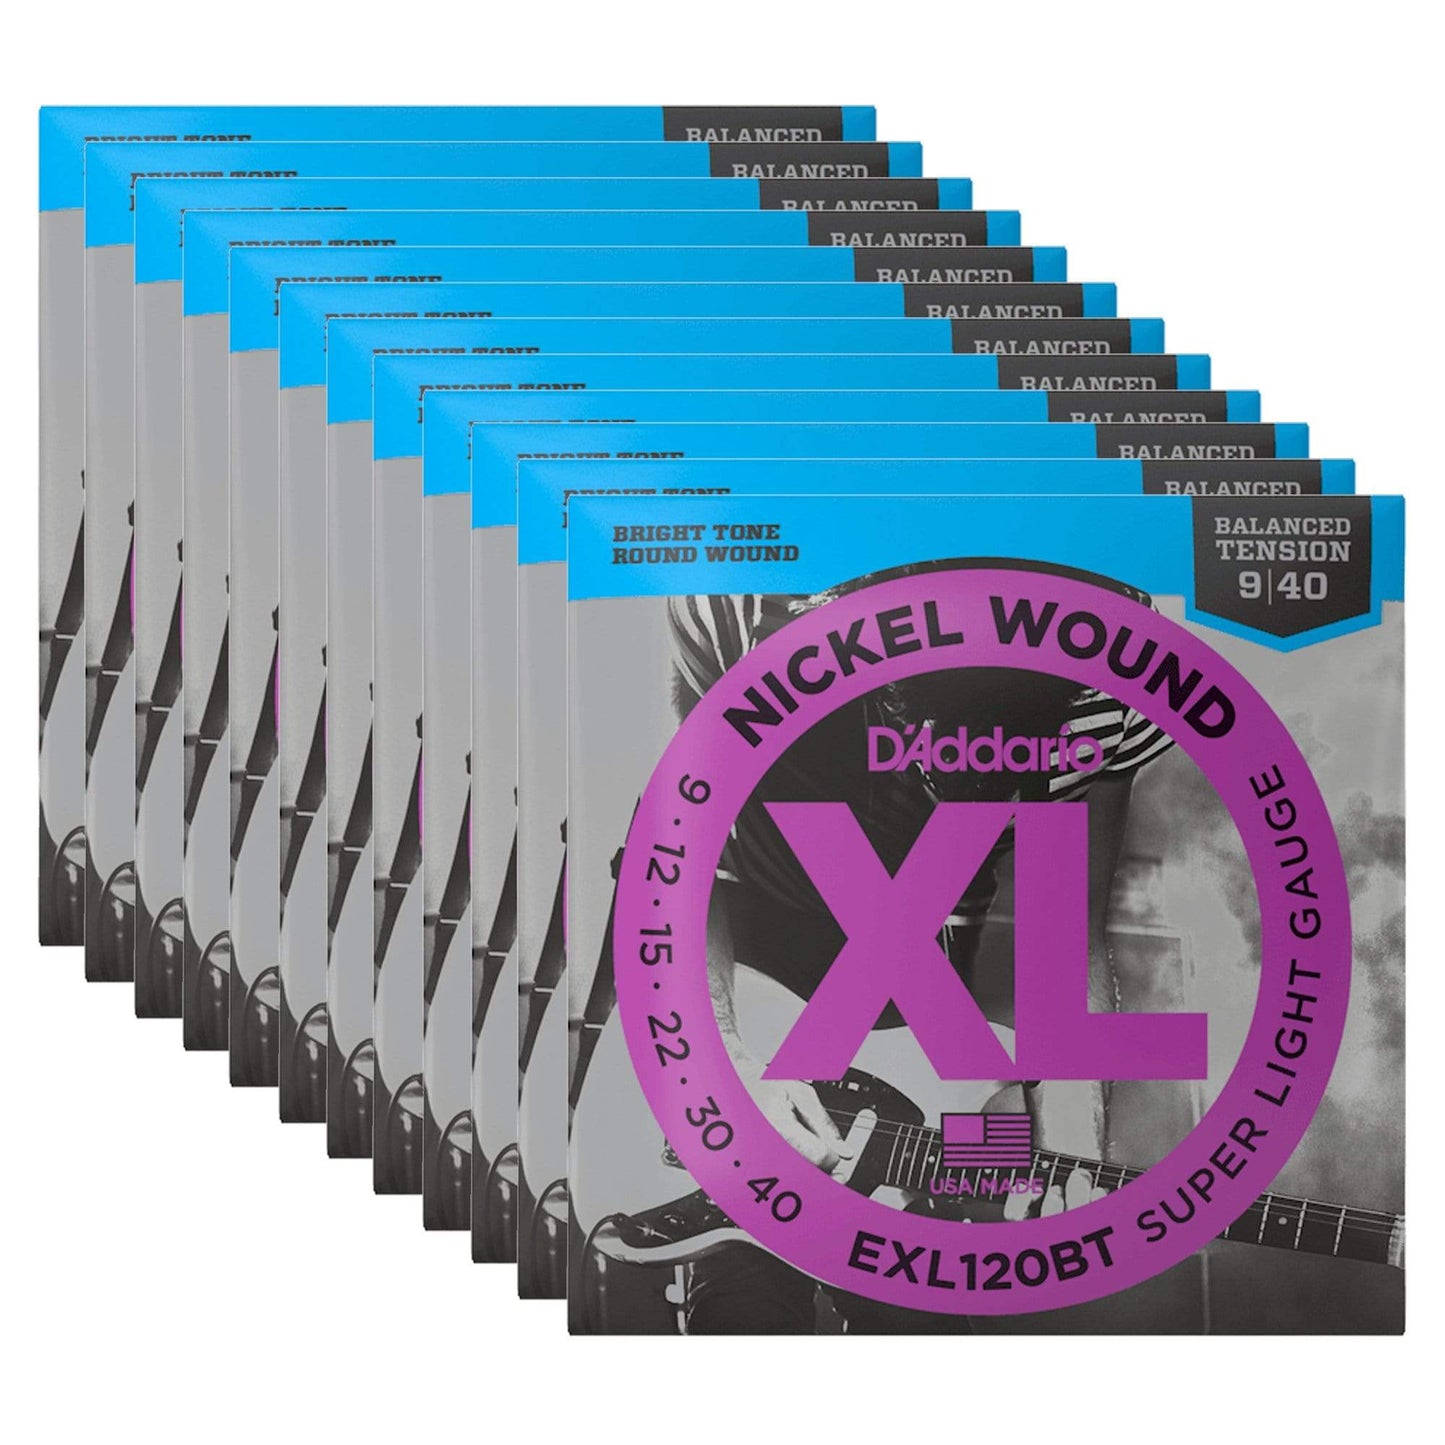 D'Addario EXL120BT Balanced Tension Electric Super Light 9-40 12 Pack Bundle Accessories / Strings / Guitar Strings